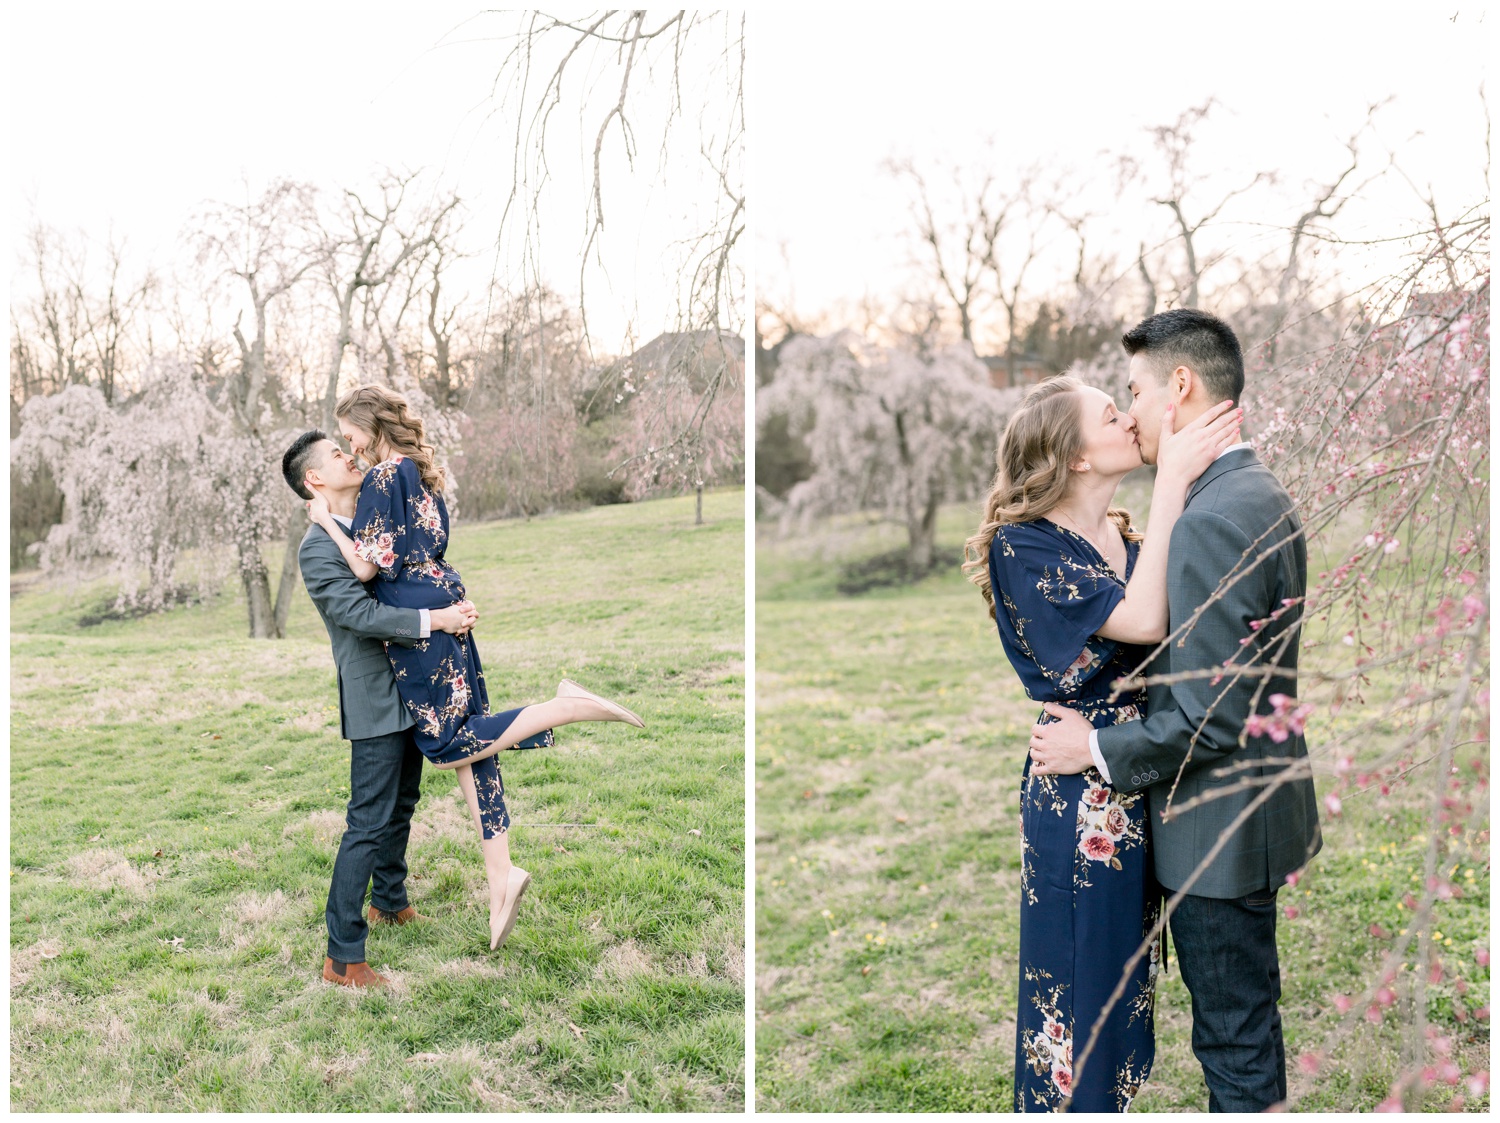 Engagement Session at Ault Park - Spring Cherry Blossoms - Cincinnati Wedding Photographer